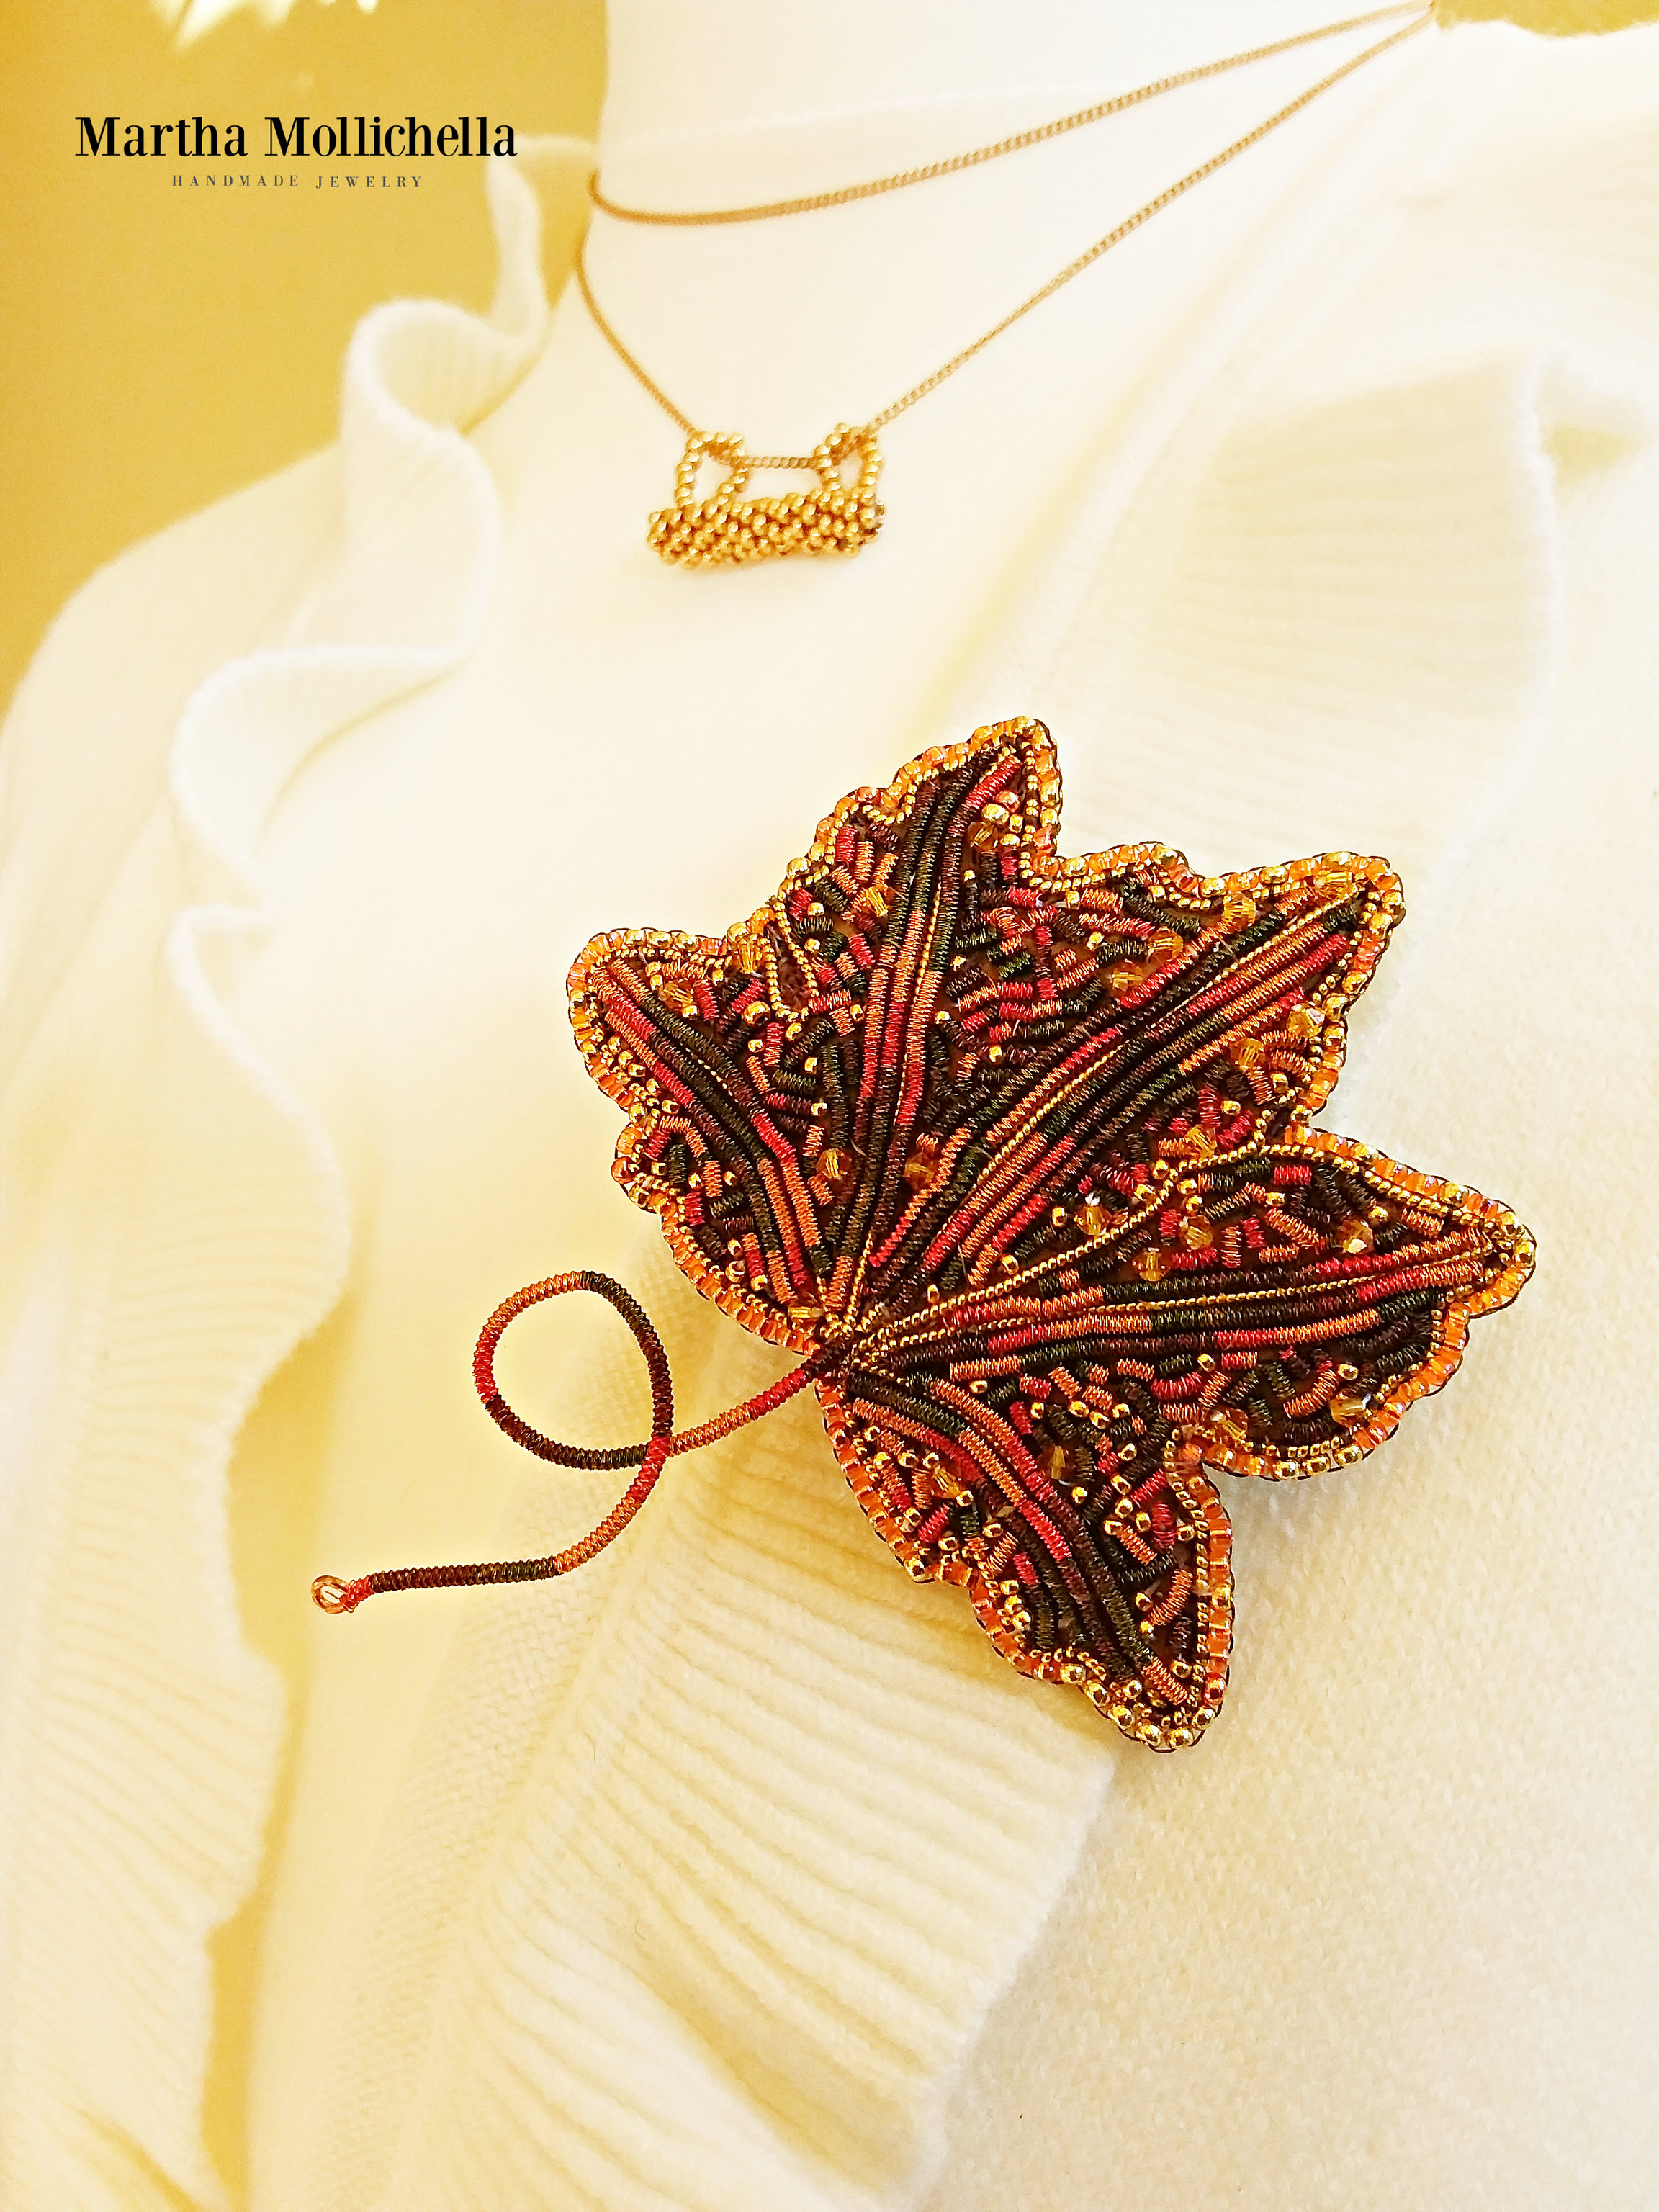 maple leaf brooch pendant handmade jewelry